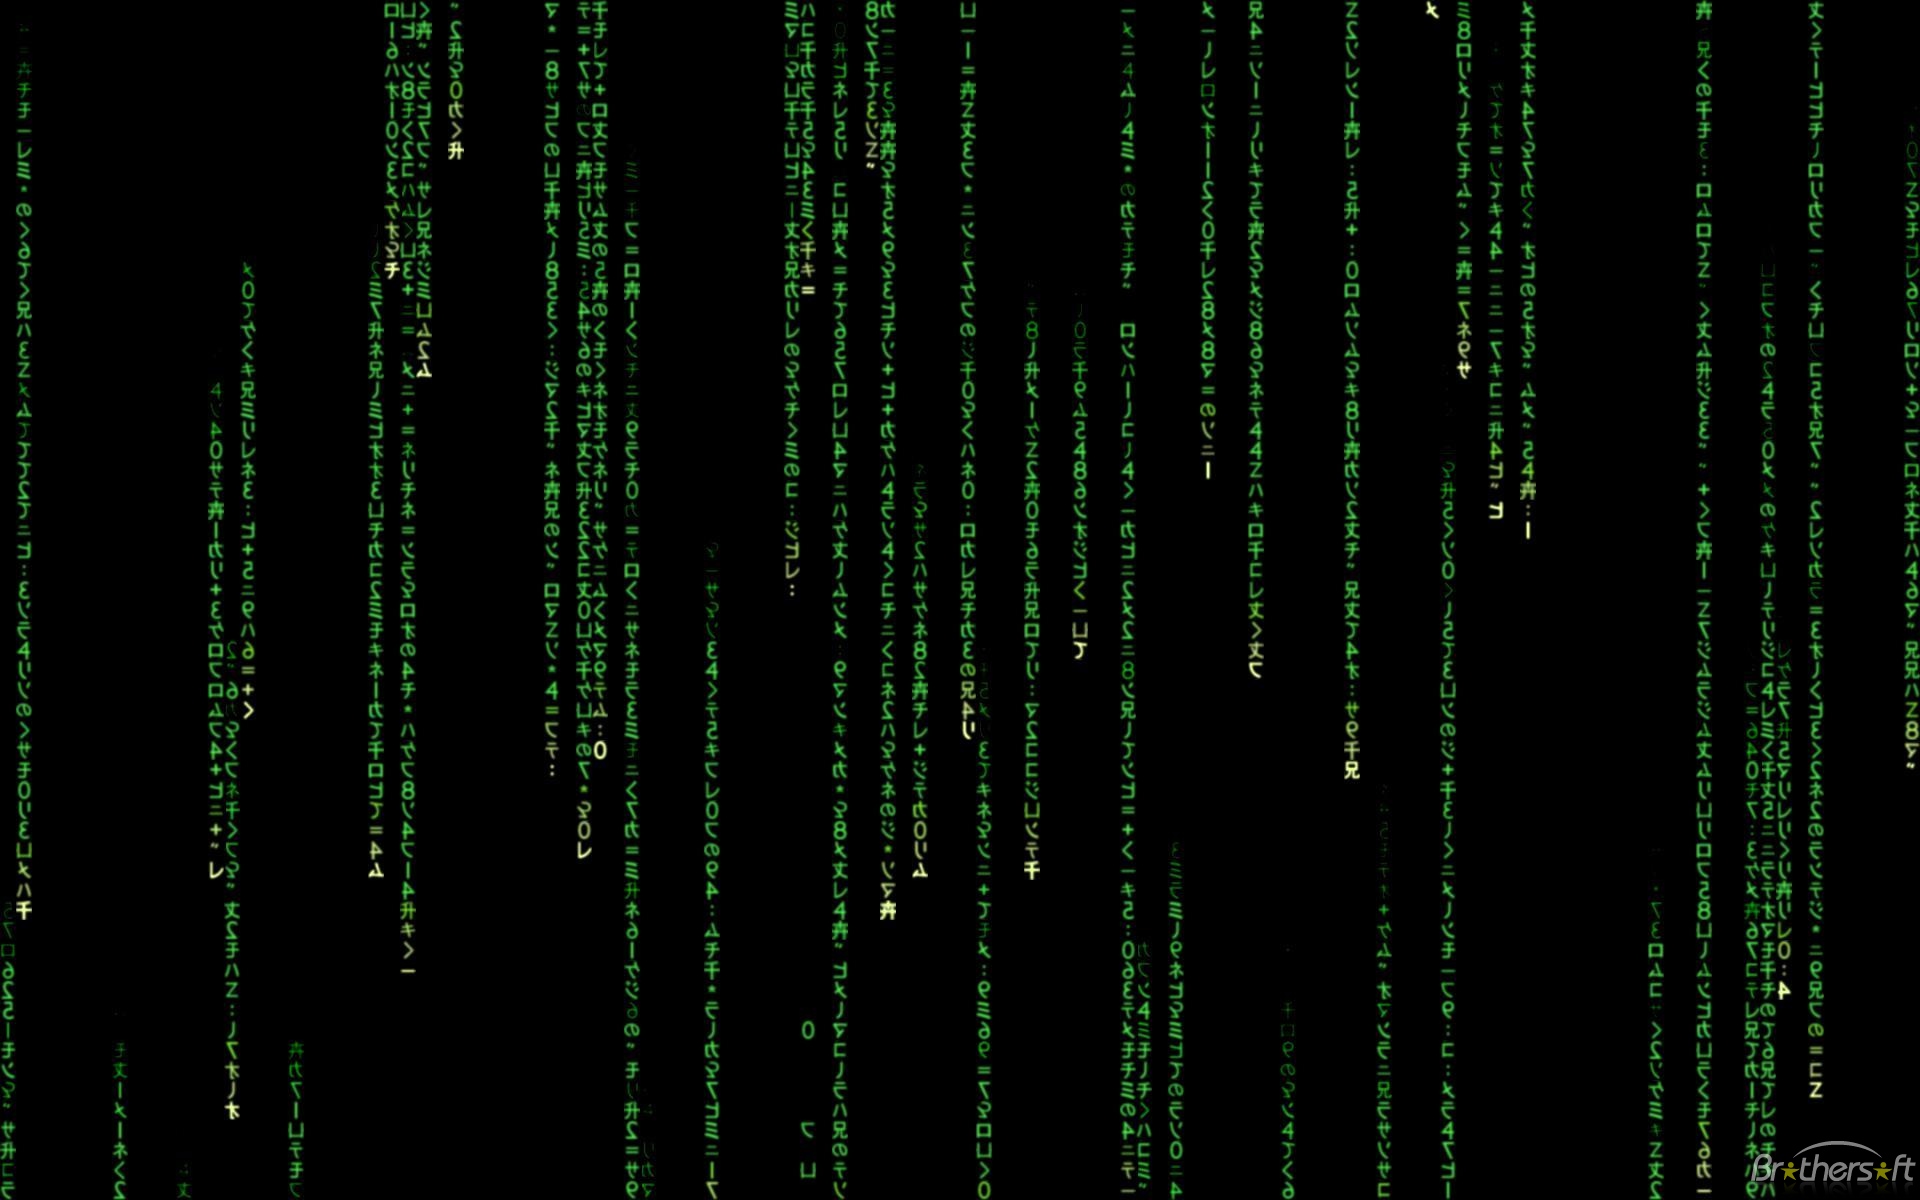 The Matrix Screen Saver 12b